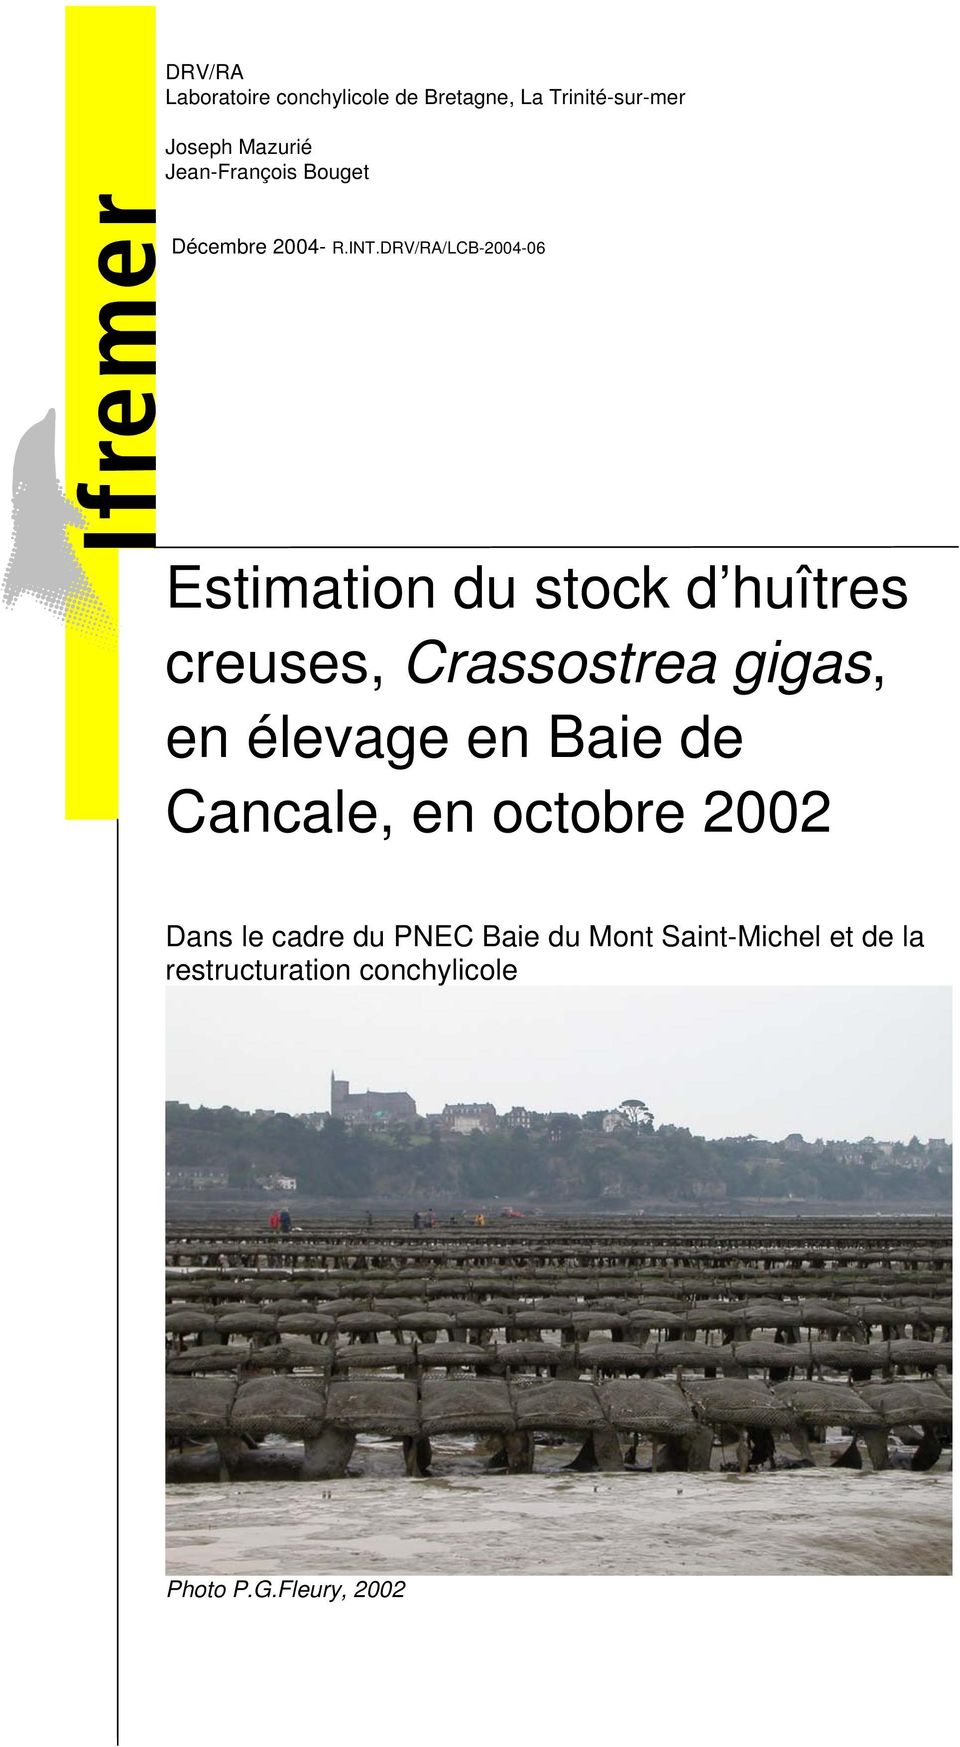 DRV/RA/LCB-2004-06 Estimation du stock d huîtres creuses, Crassostrea gigas, en élevage